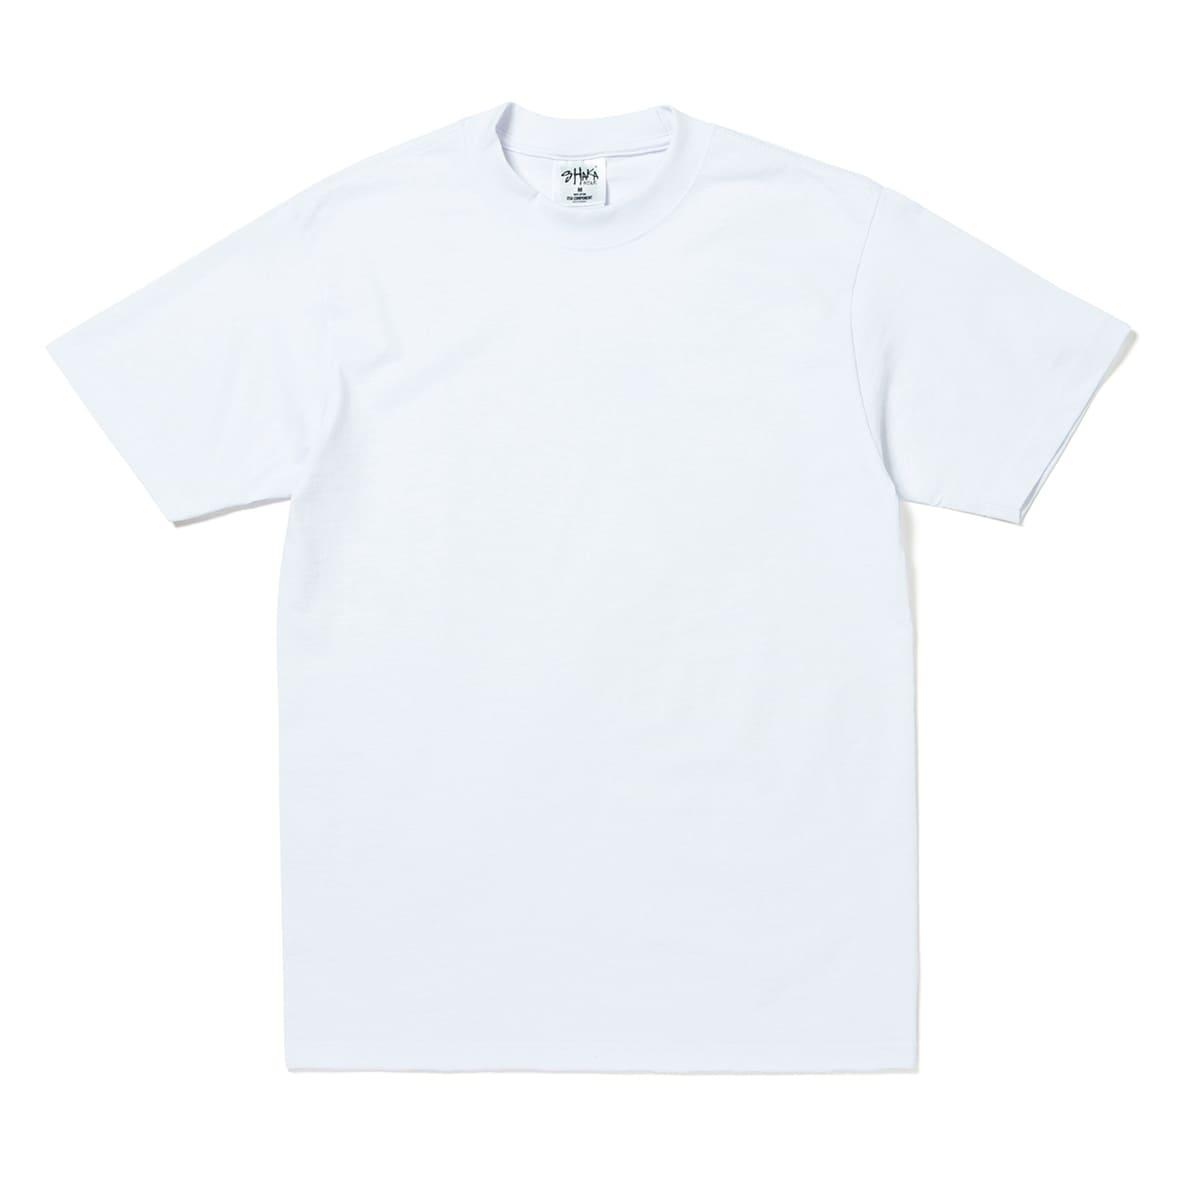 7.5oz マックスヘビーウェイトTシャツ | ビッグサイズ | 1枚 | SHMHSS | ホワイト